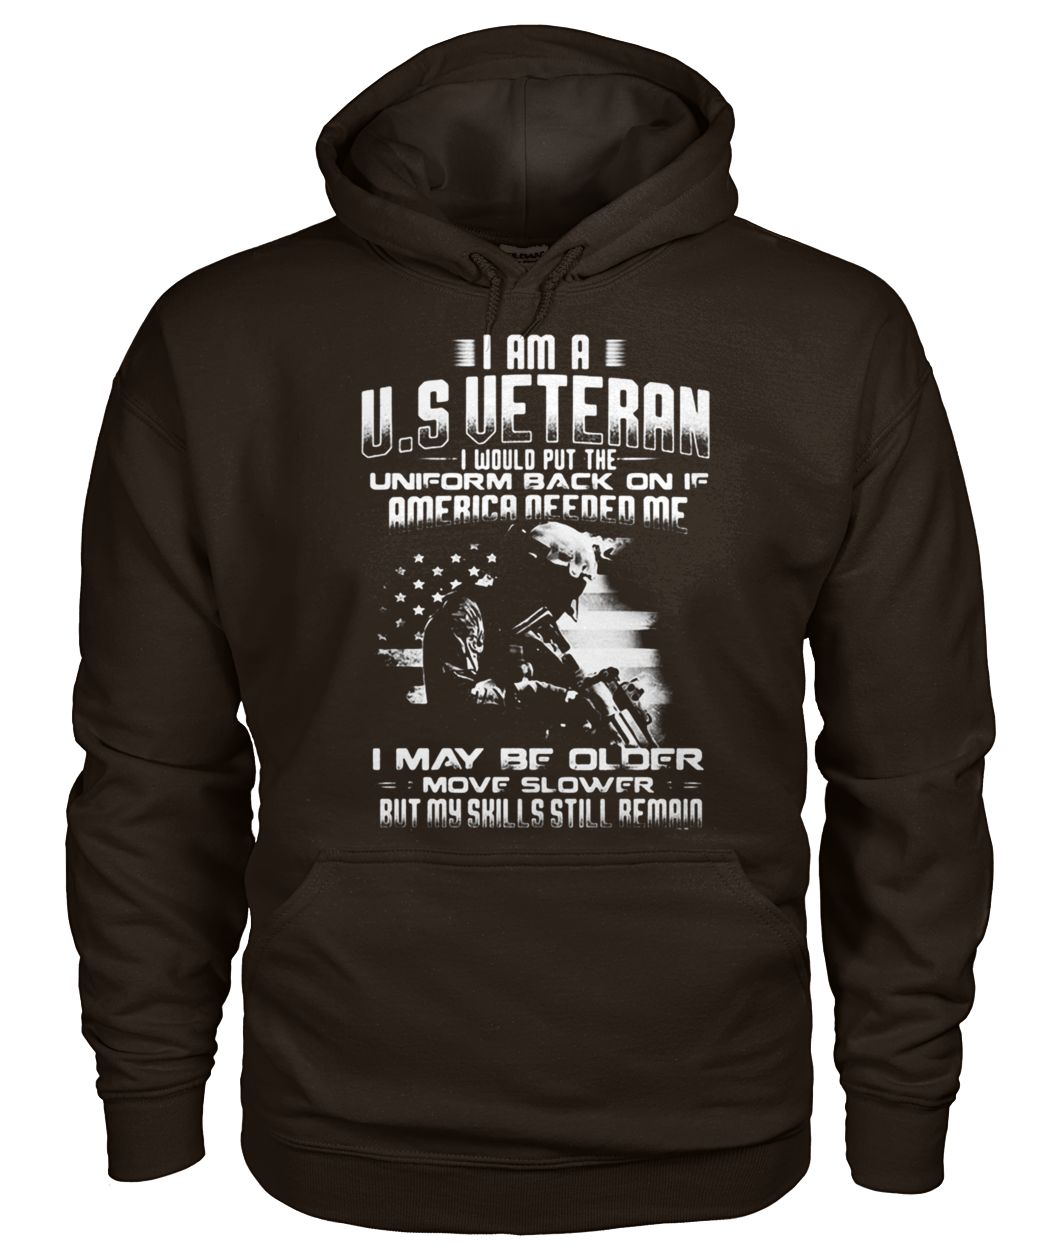 I am a US veteran I would put the uniform back on if america needed me gildan hoodie